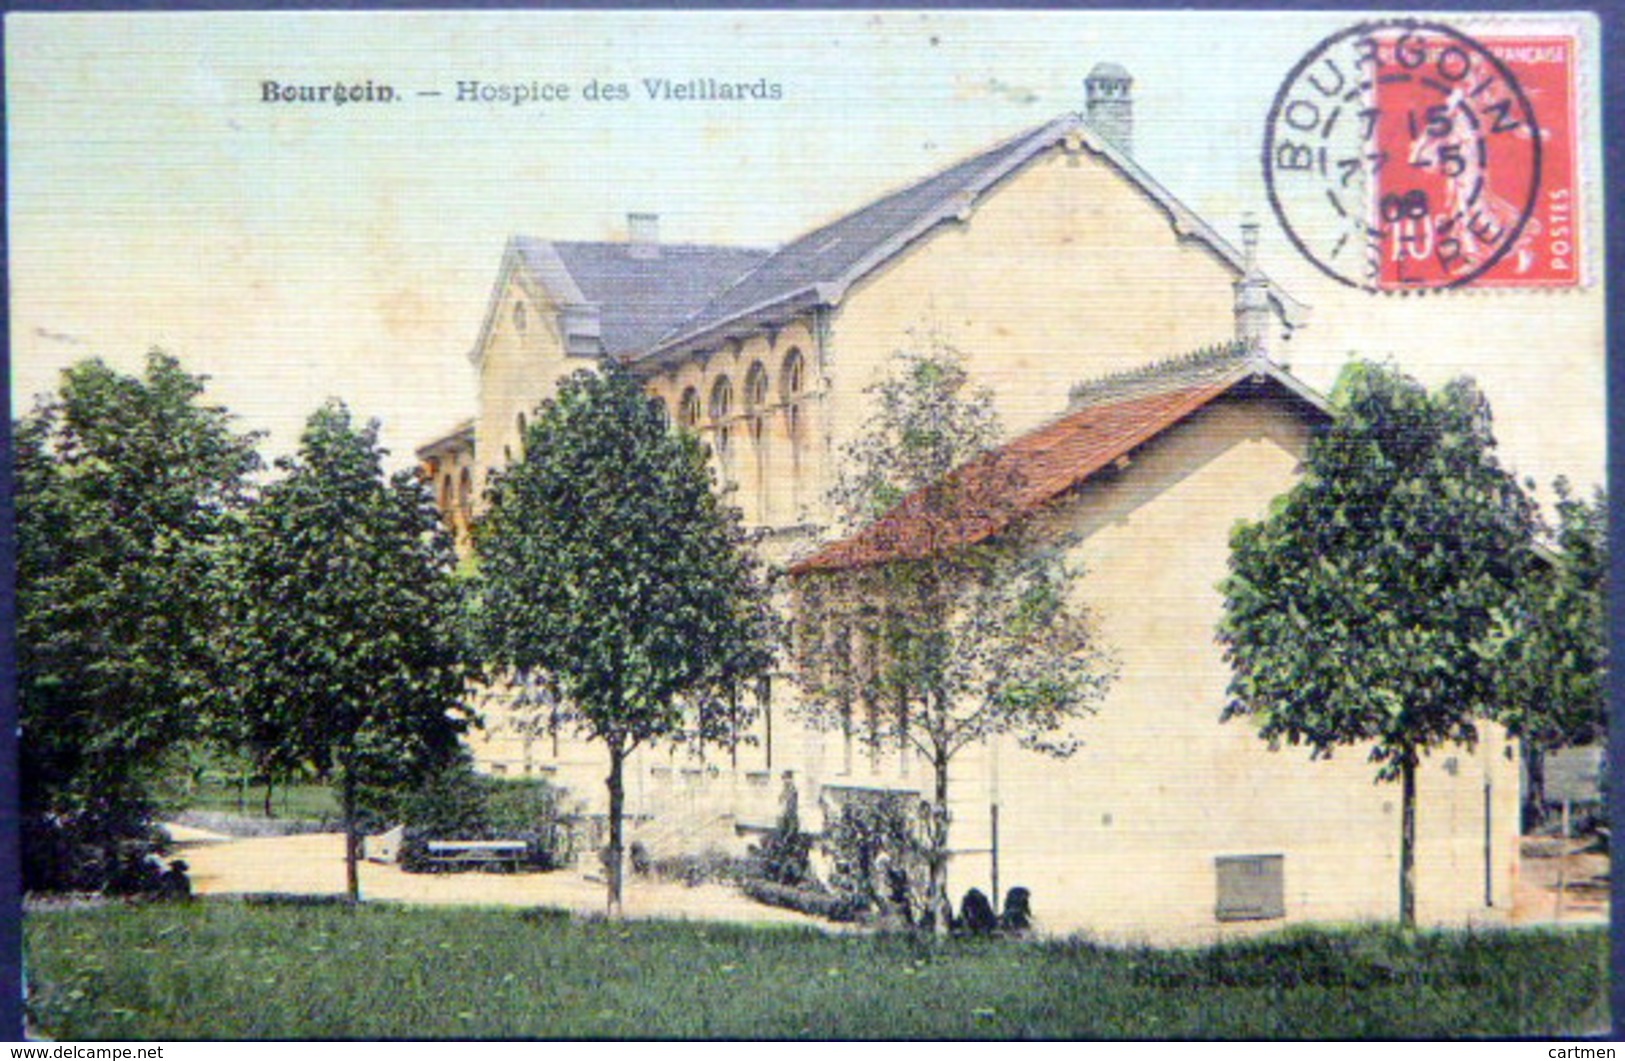 38 BOURGOIN HOSPICE DES VIEILLARDS HOPITAL SANTE ASILE 1906 - Bourgoin